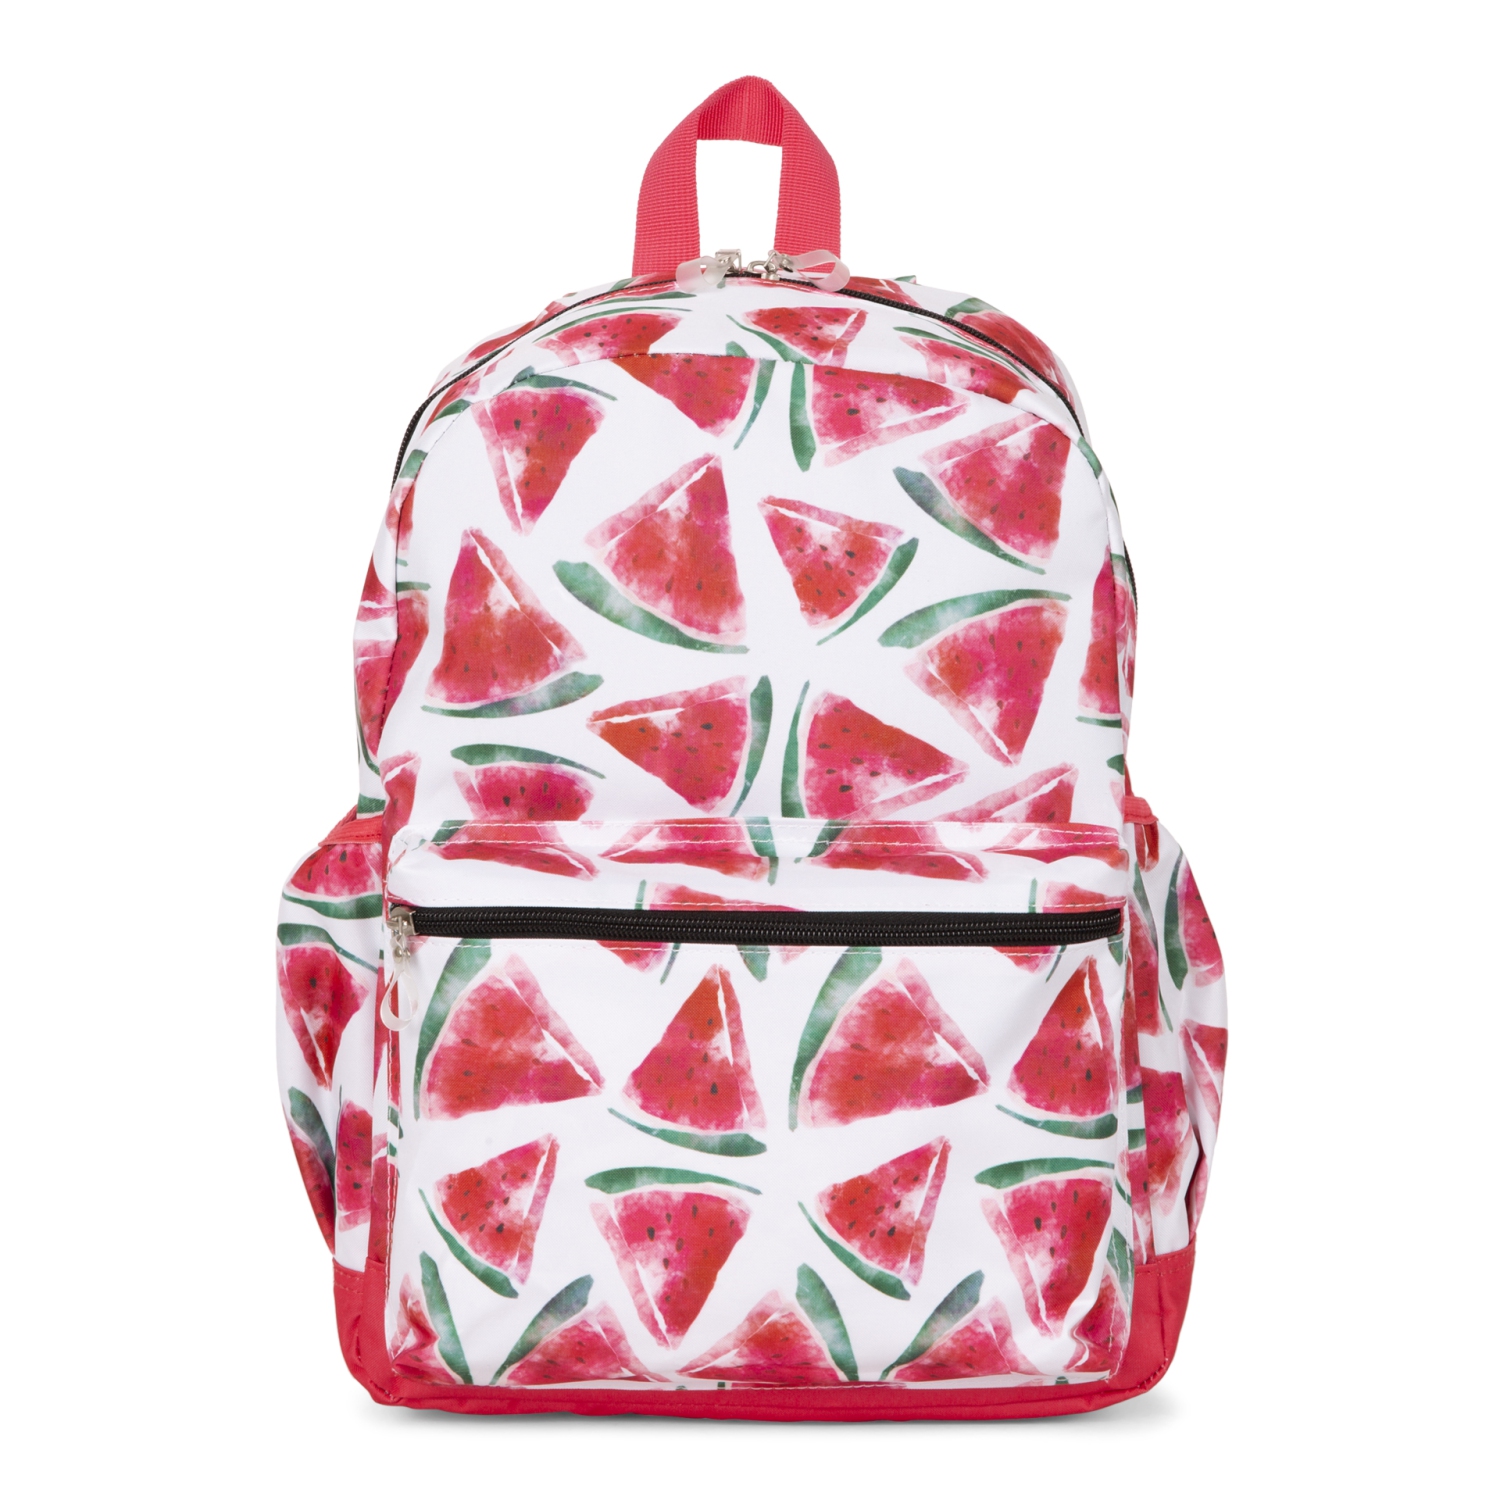 Kids' Laptop Backpack Watermelon